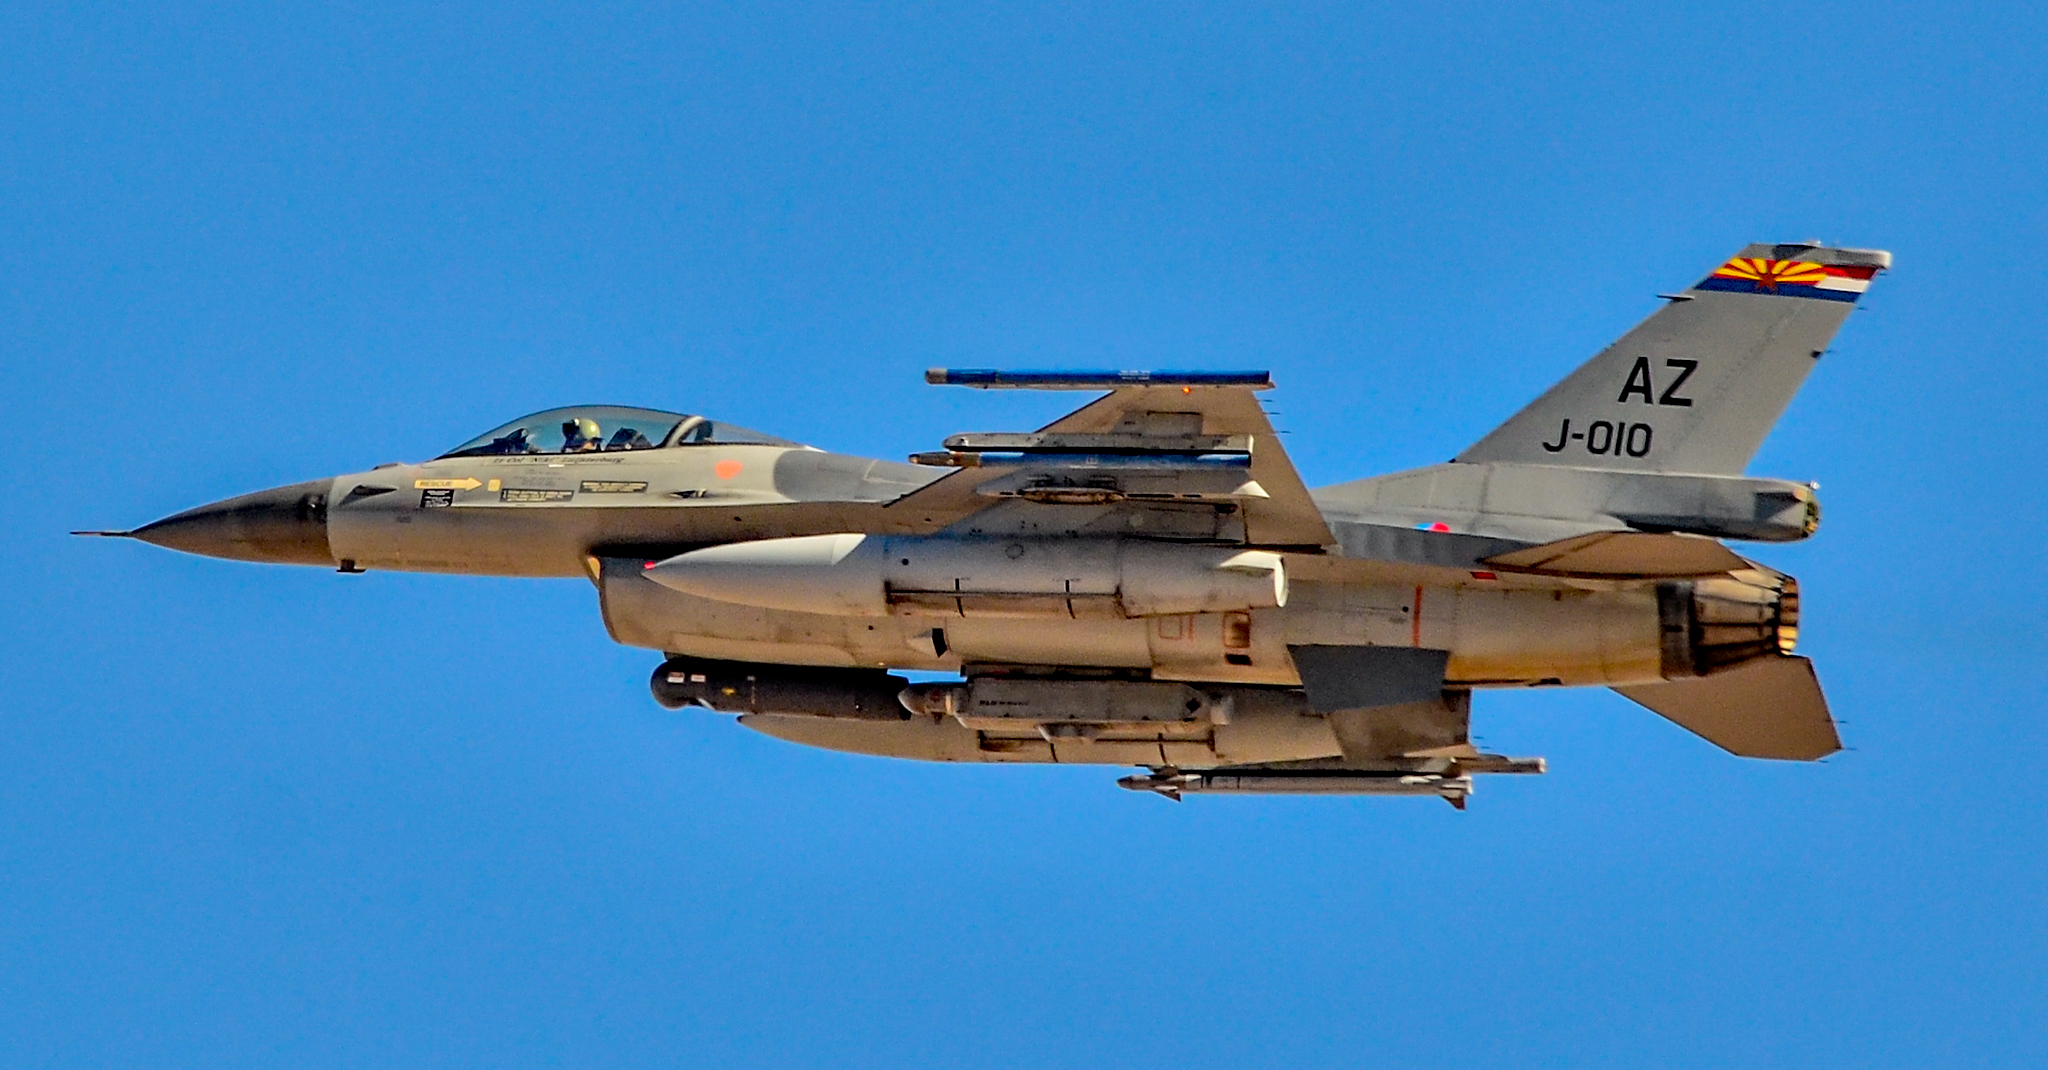 General_Dynamics_F-16A_Royal_Netherlands_Air_Force_J-010_Detachment_Tucson%2C_Arizona_%2833117789502%29.jpg